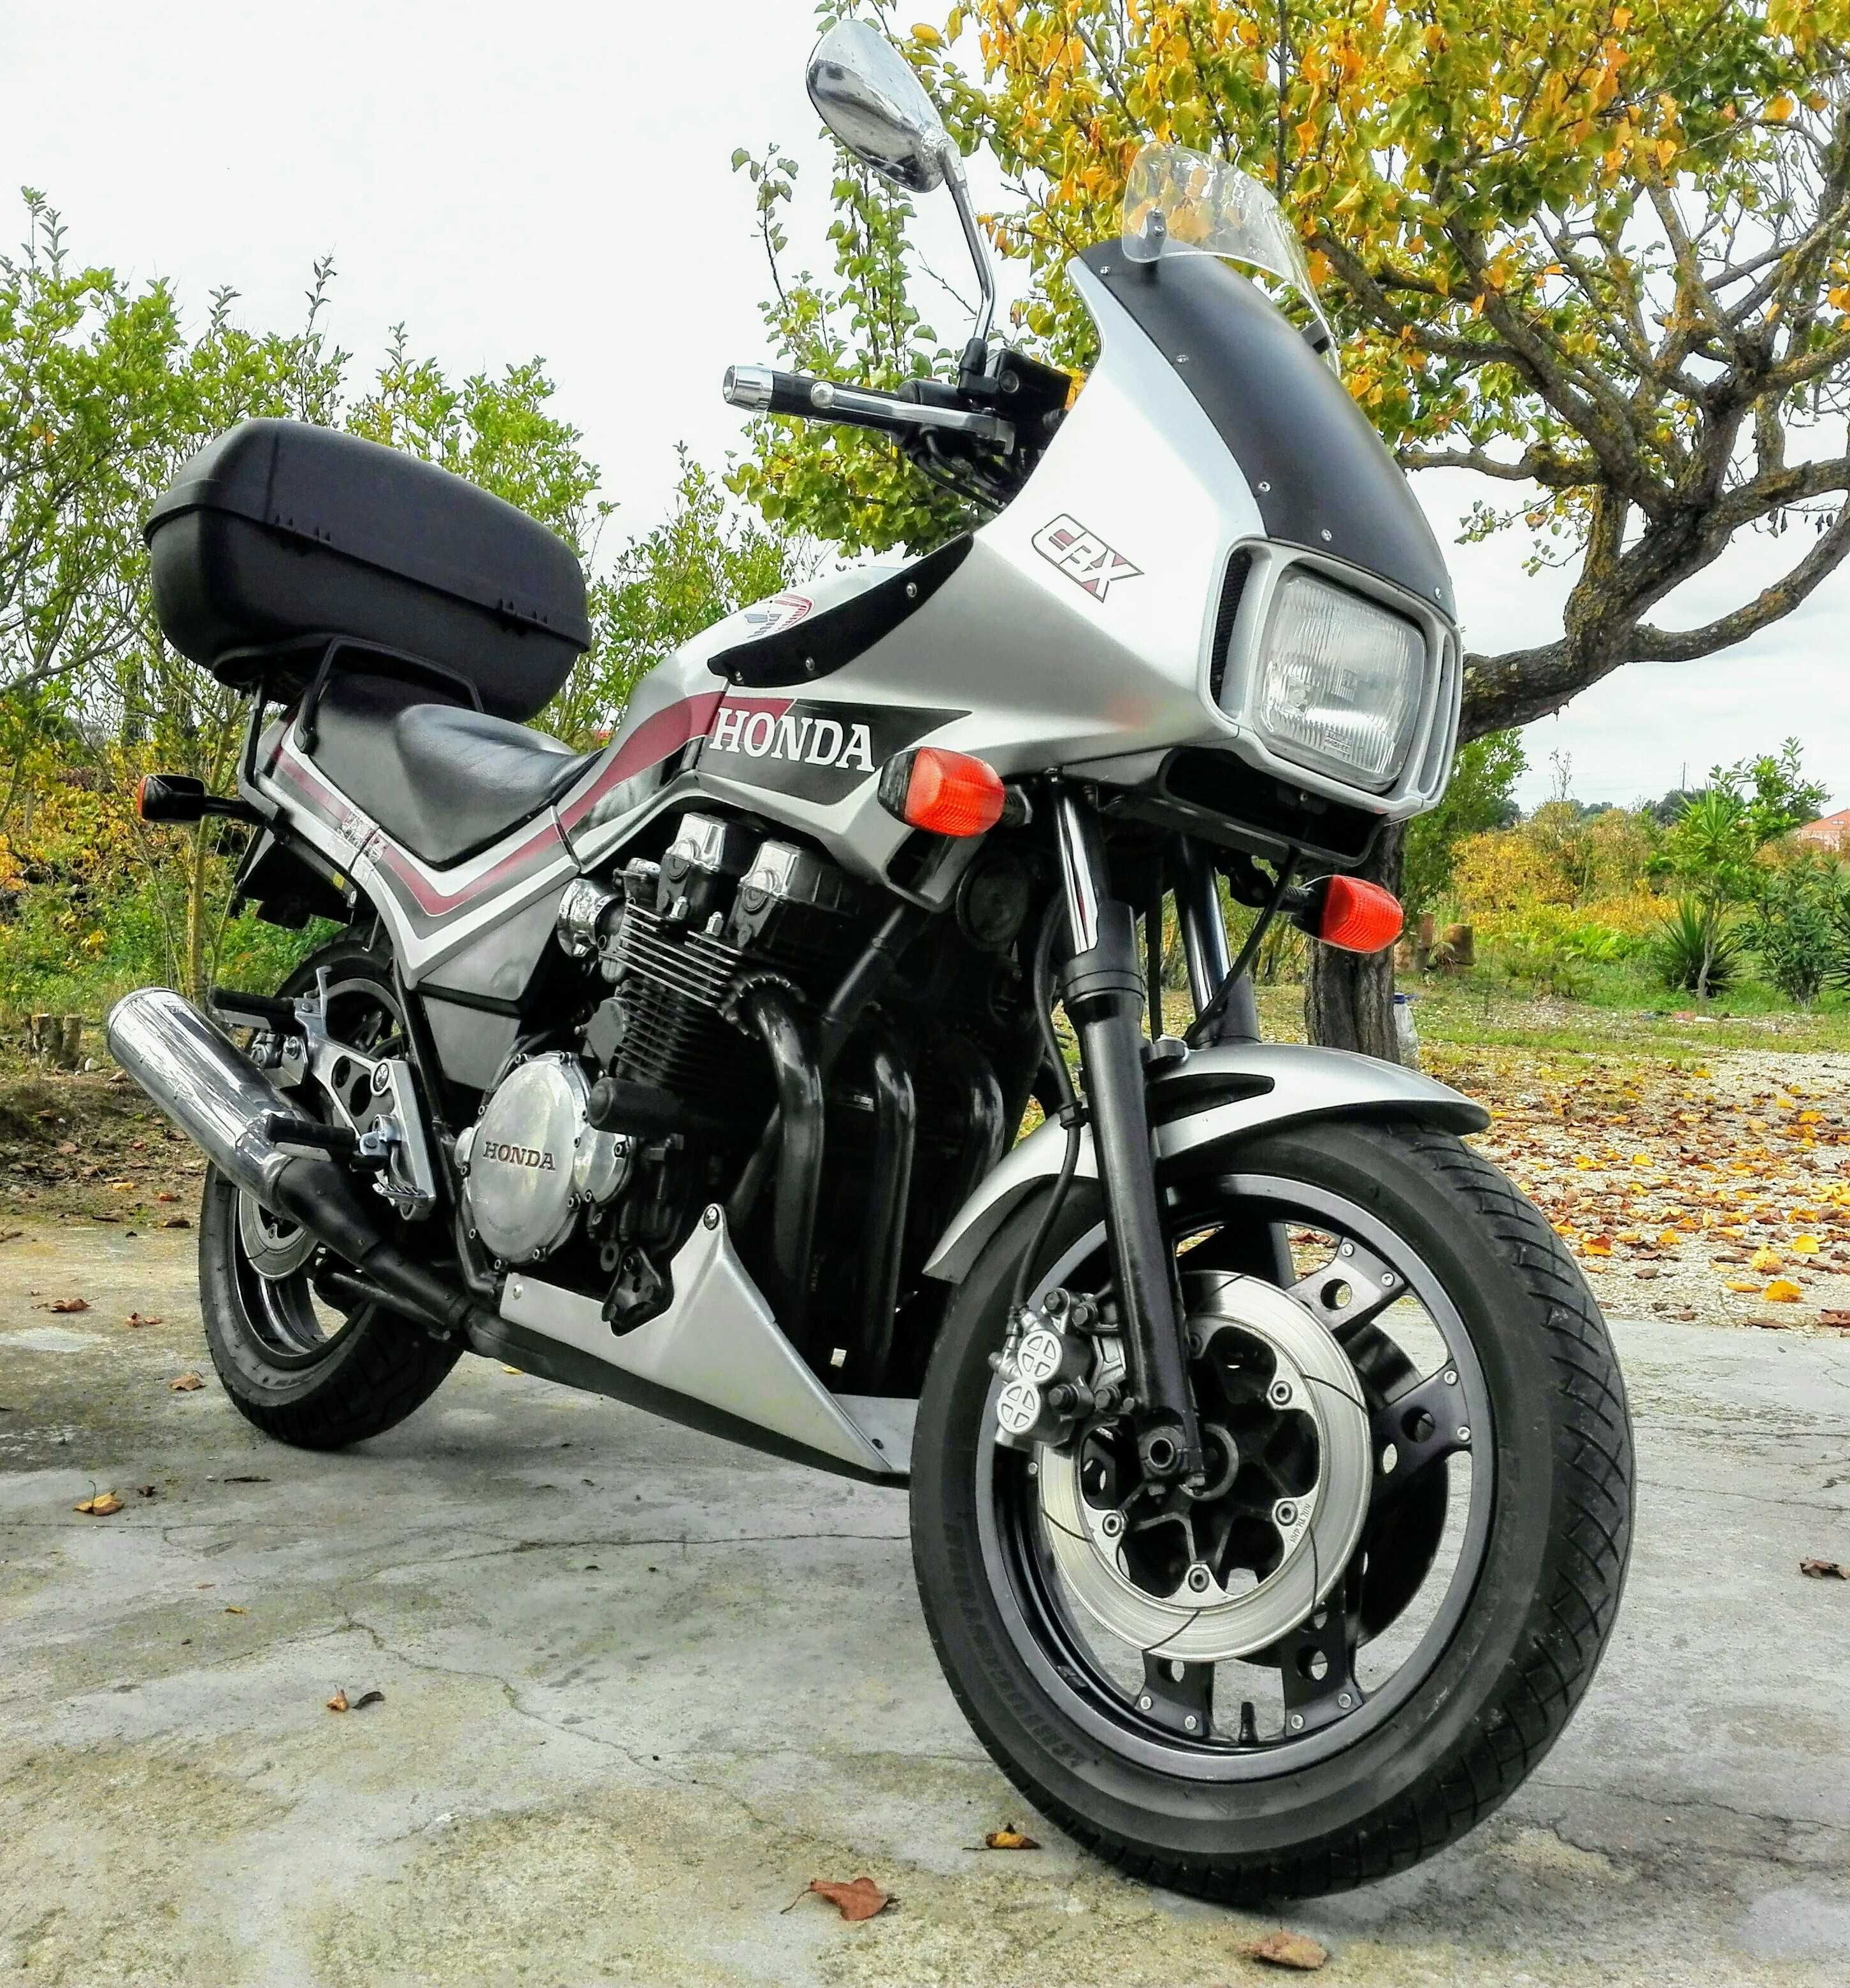 Honda CBX 750 cc